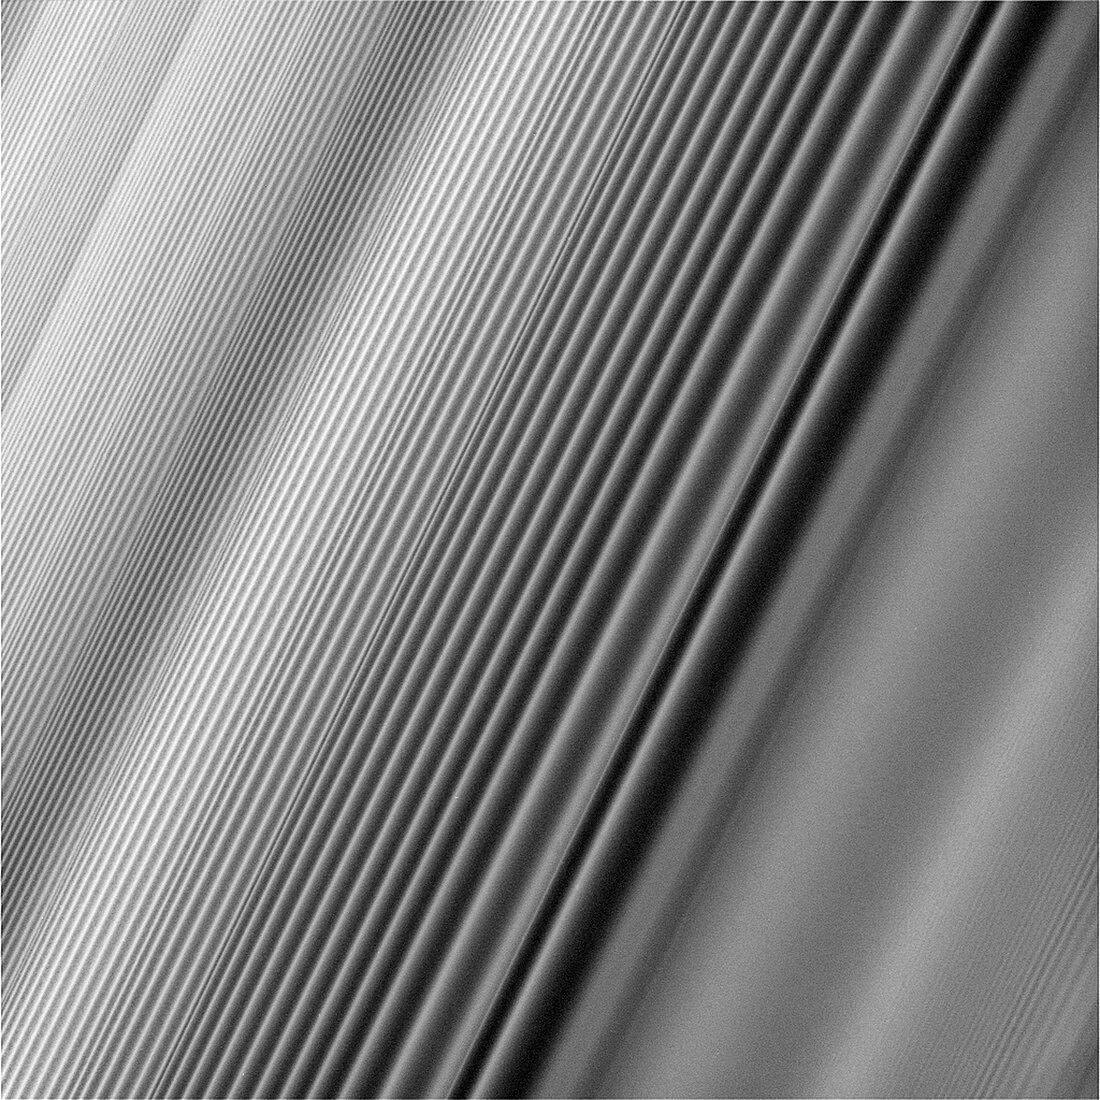 Wave in Saturn's rings, Cassini image